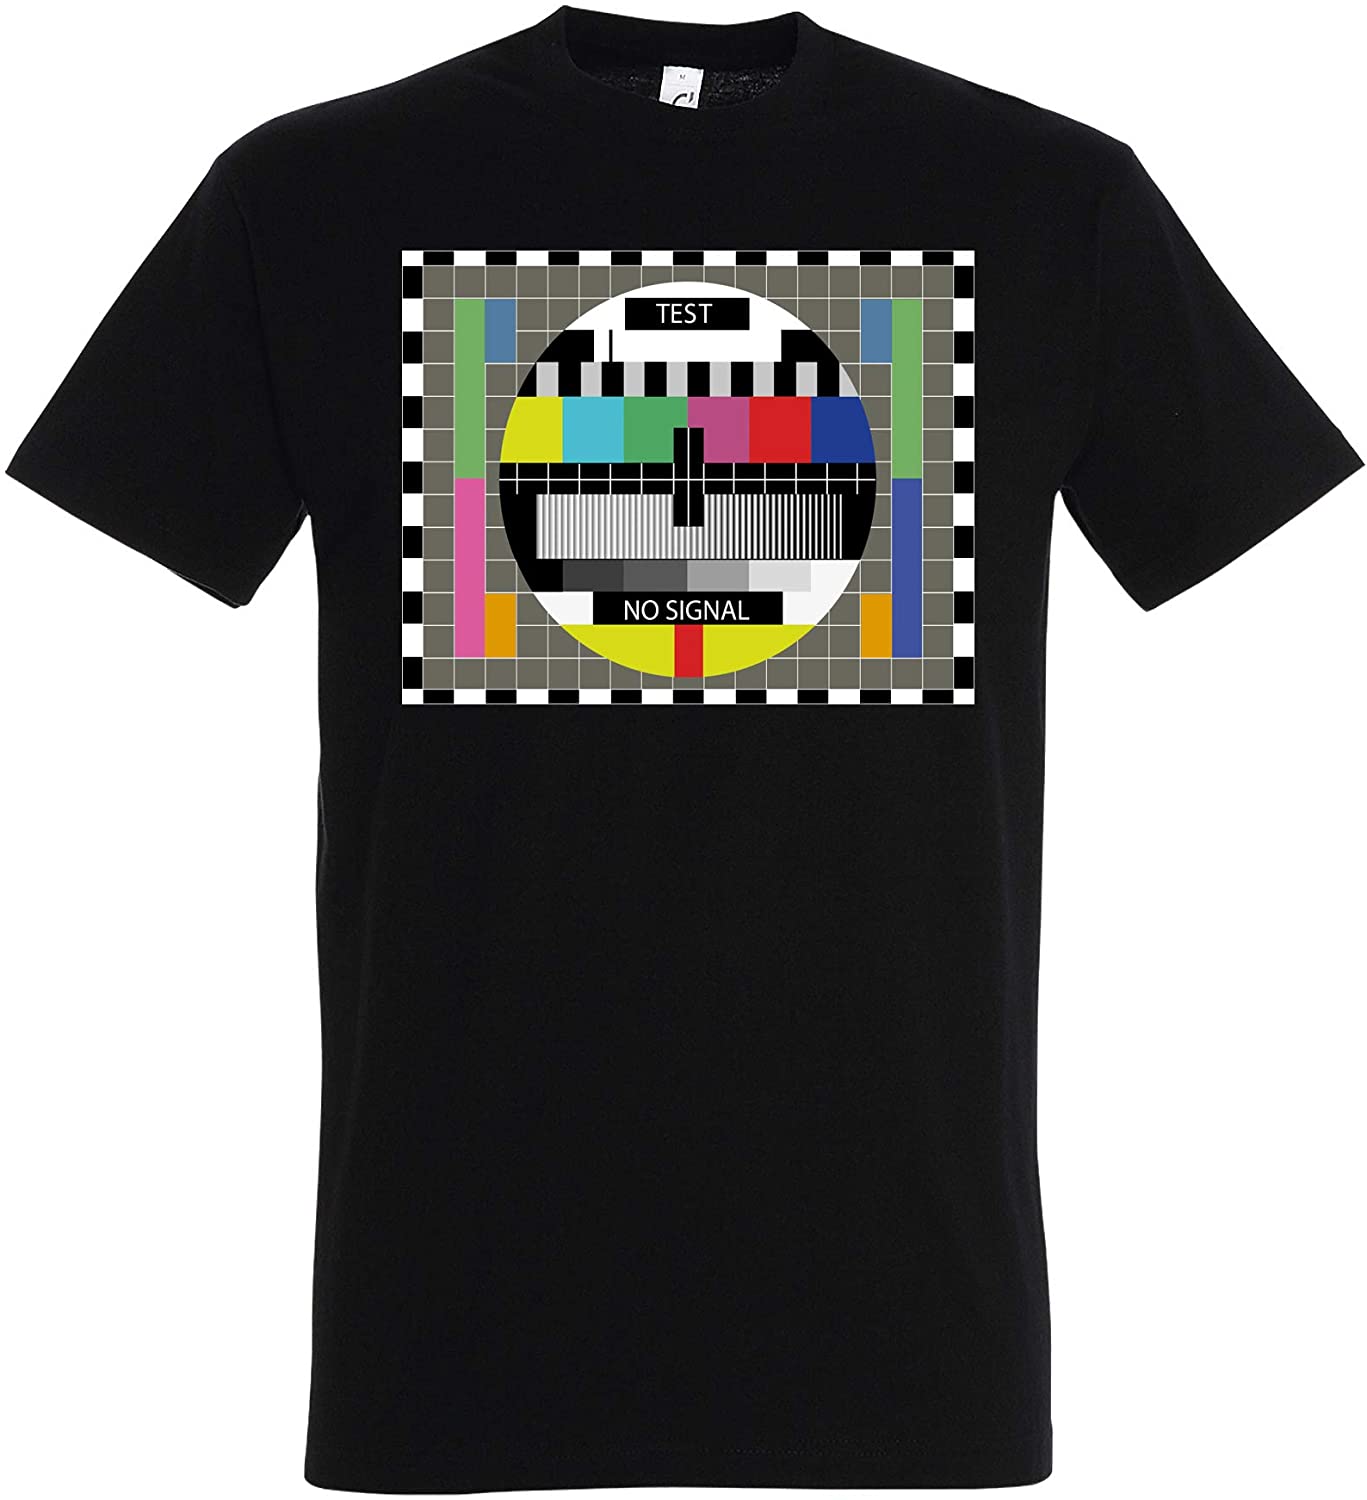 T-Shirt Testbild Fernsehen Big Bang Theory Sheldon Retro TV Nerd Funshirt